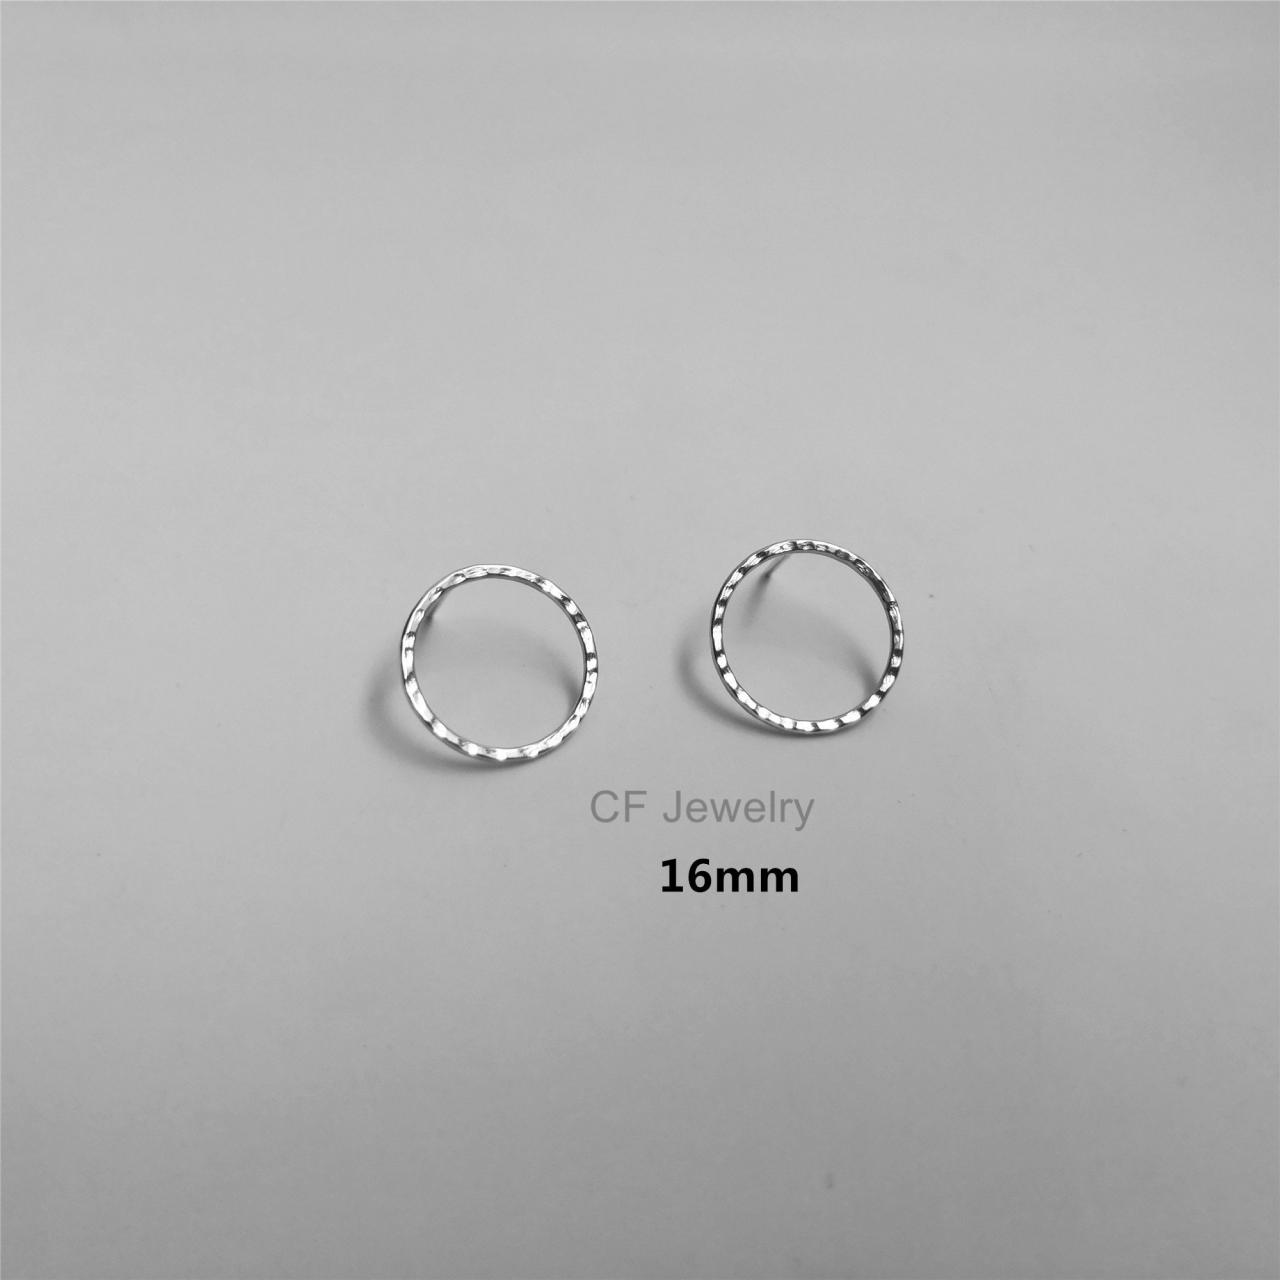 Large Circle Stud, Open Circle Earrings, Hammered Circle Stud Earrings Gold, Silver Or Rose Gold, Modern Earrings 2019, Geometric Earrings